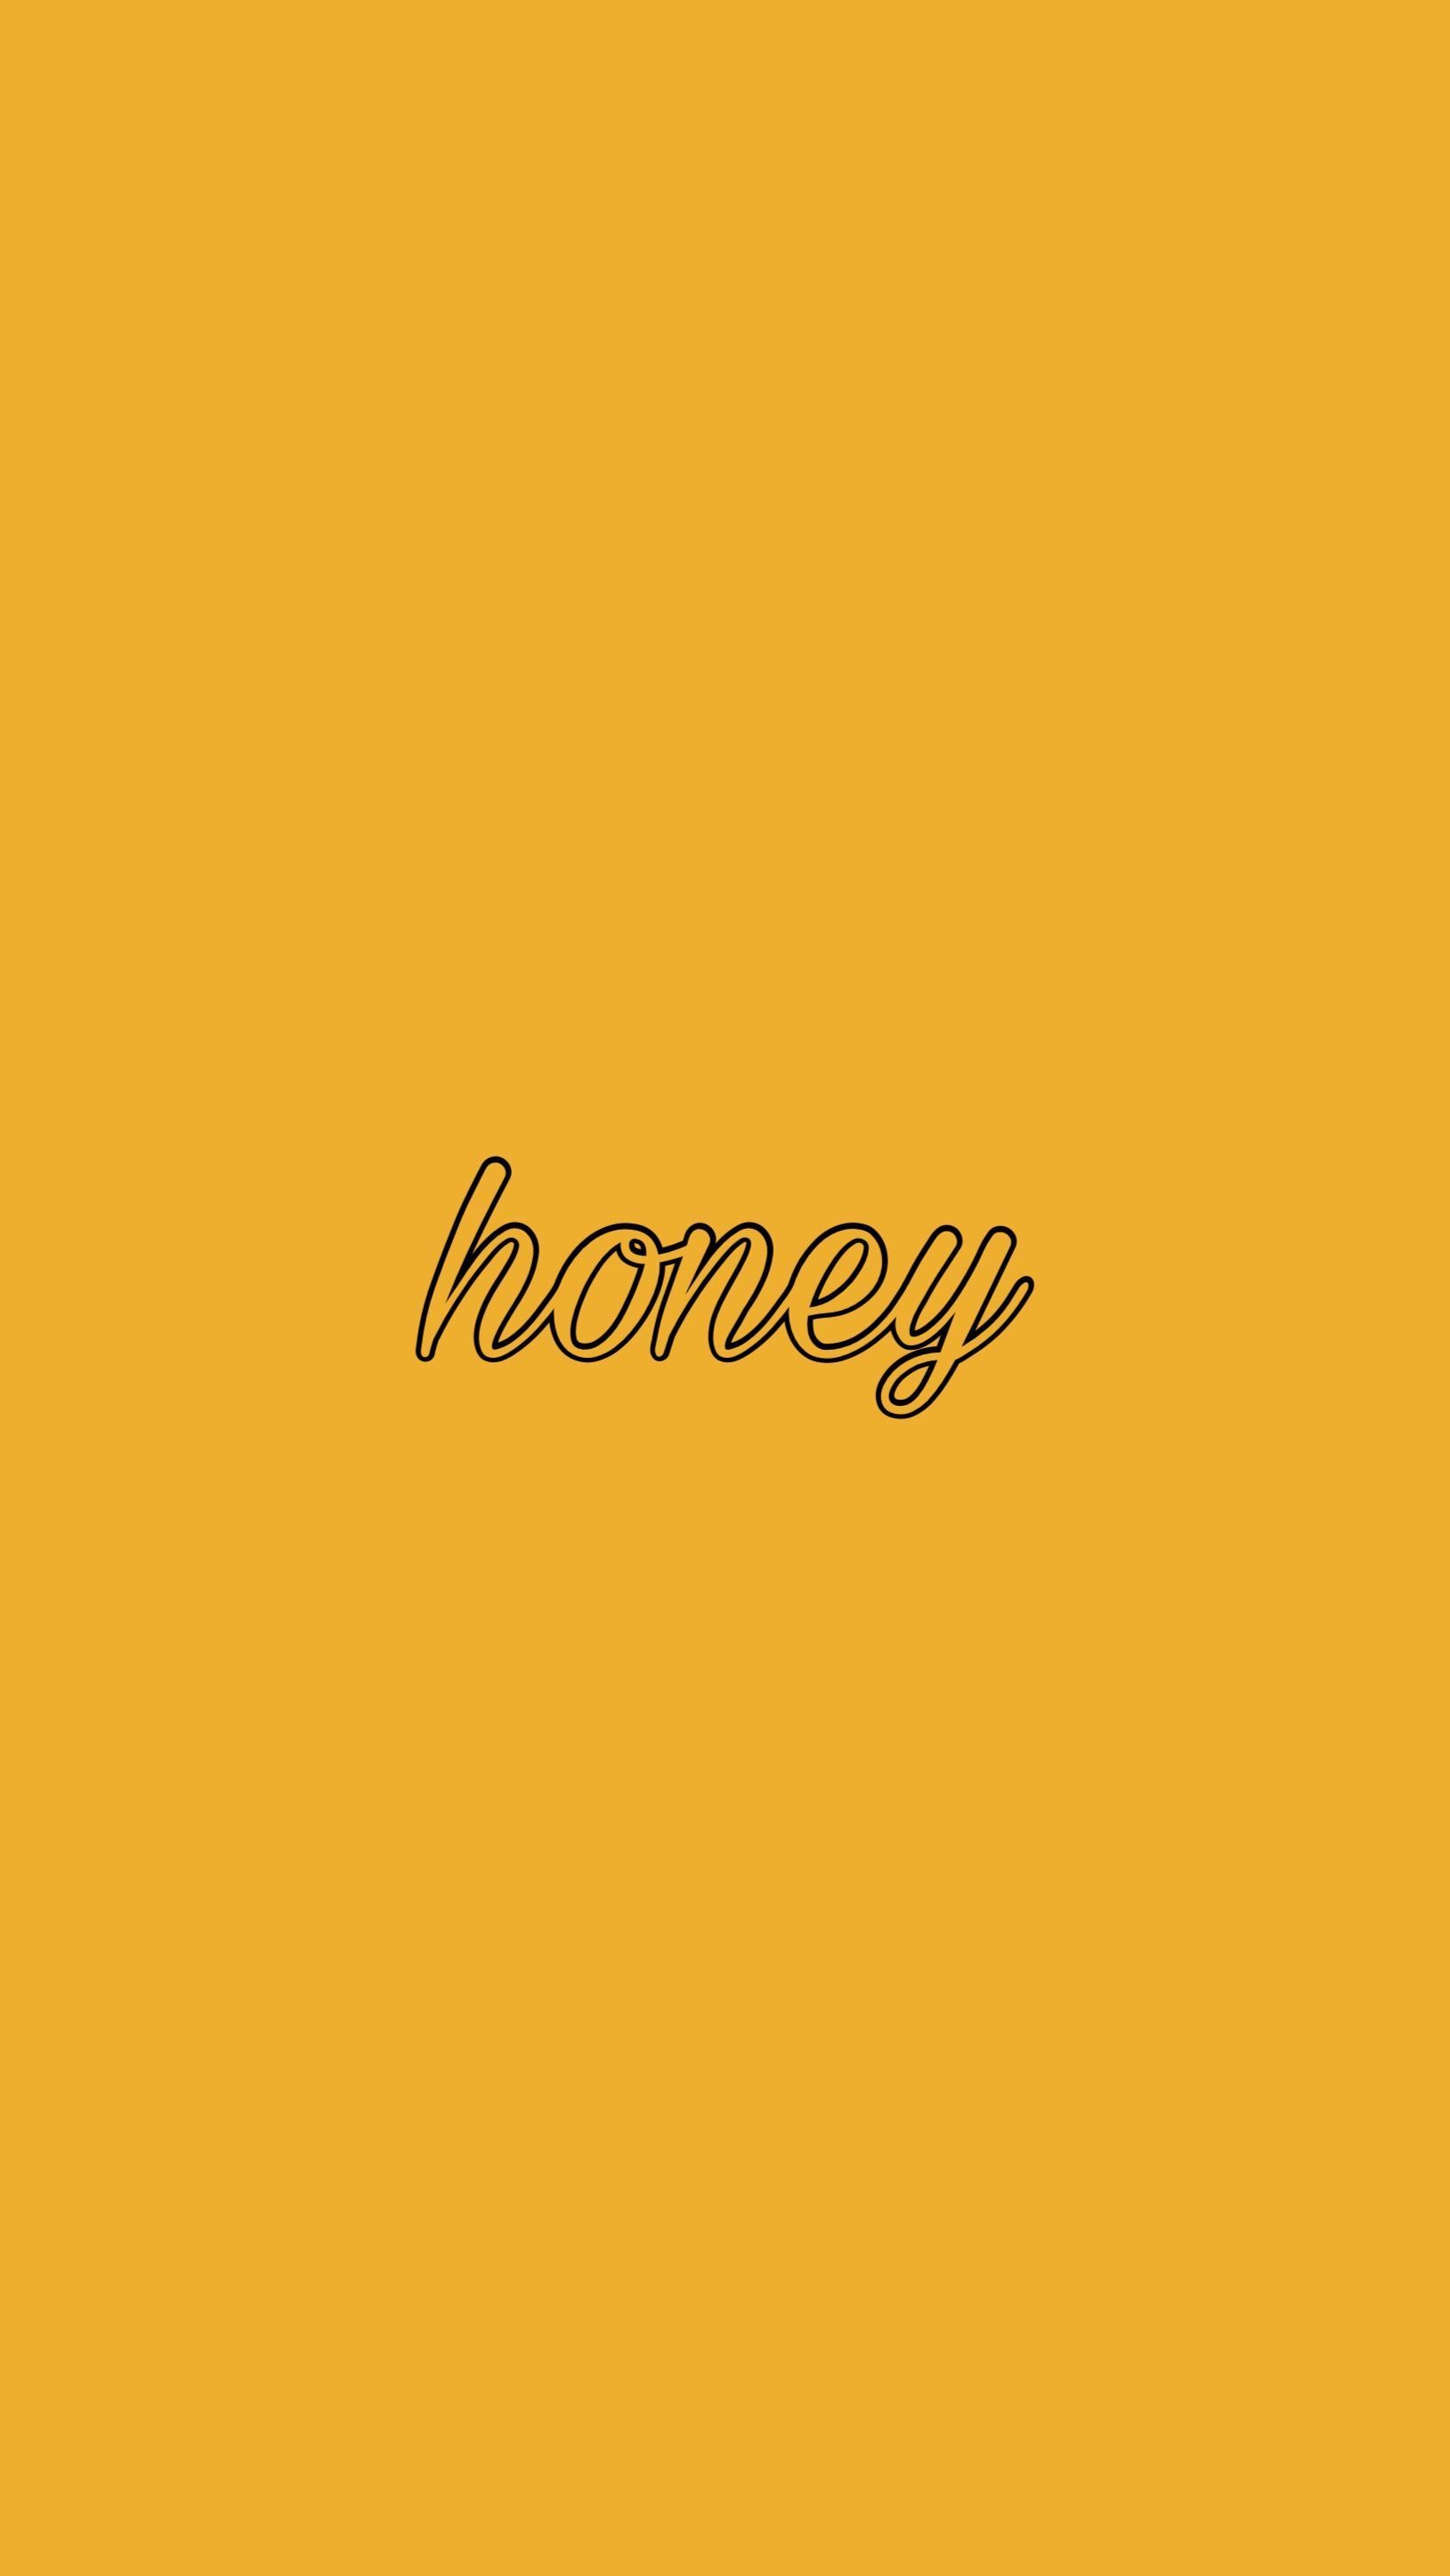 The honey logo on a yellow background - Honey